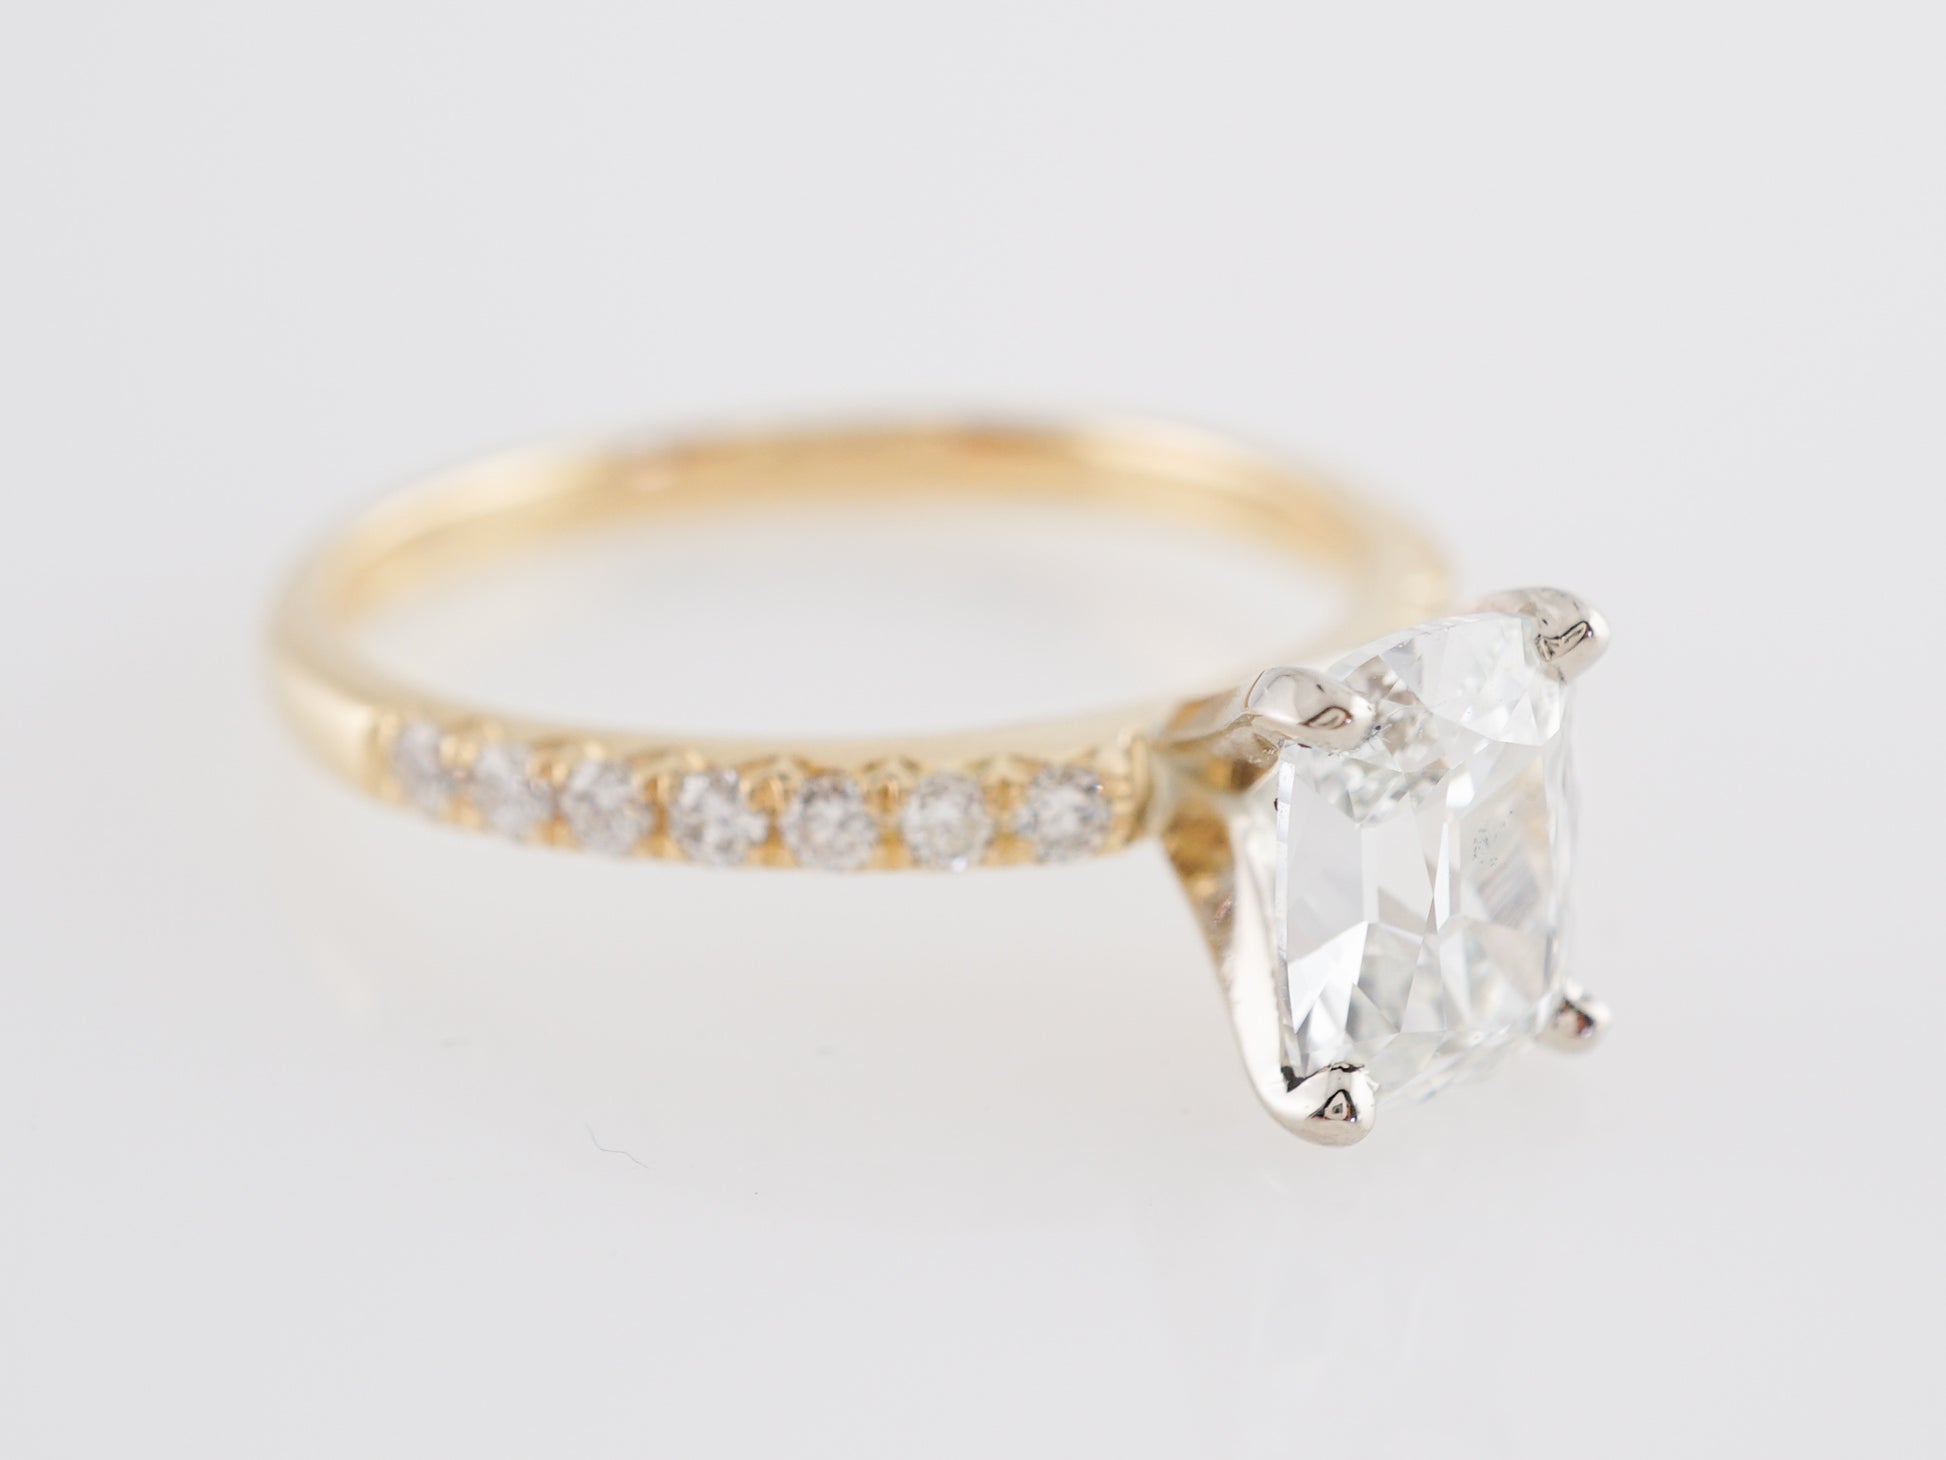 .99 Cushion Cut Diamond Engagement Ring in 14k Gold